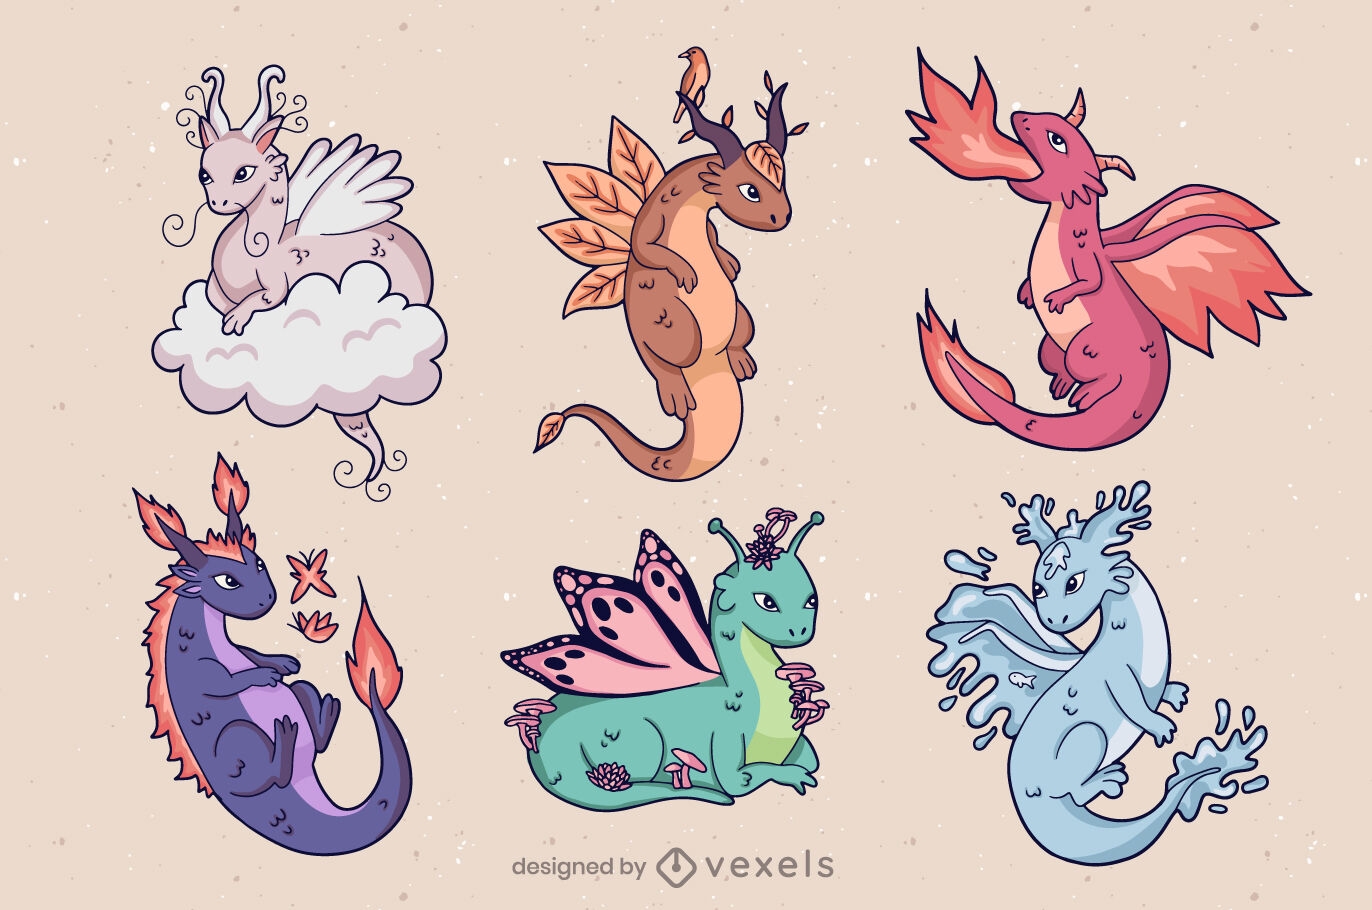 Cute dragons character set